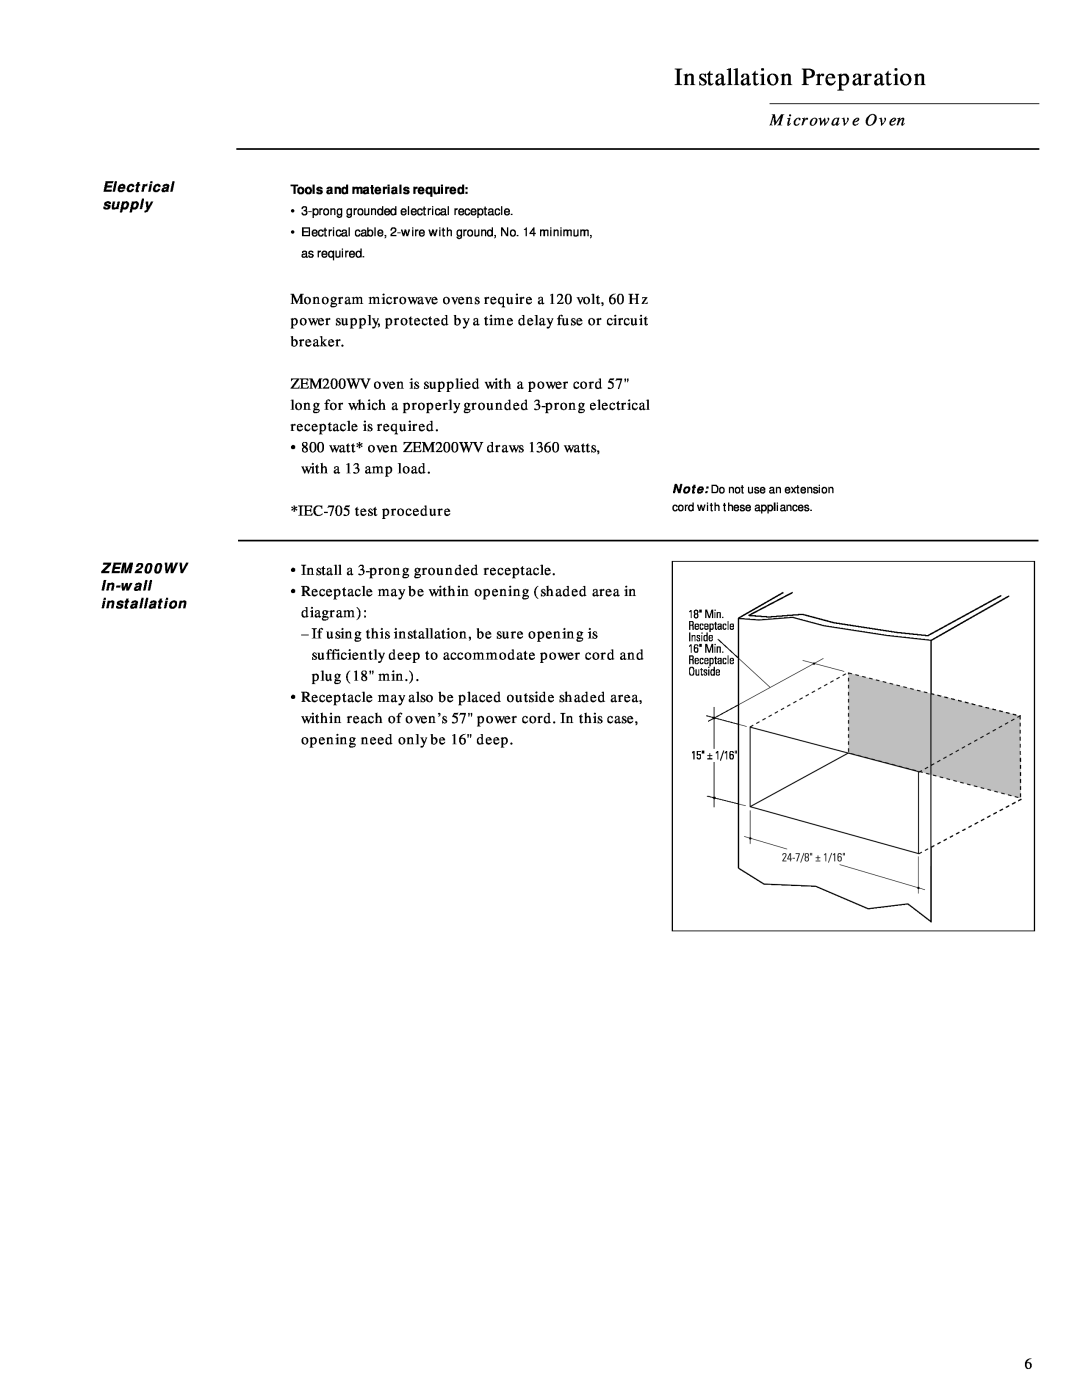 GE Monogram Installation Preparation, Micr owave Oven, Electrical supply ZEM200WV In-wallinstallation 